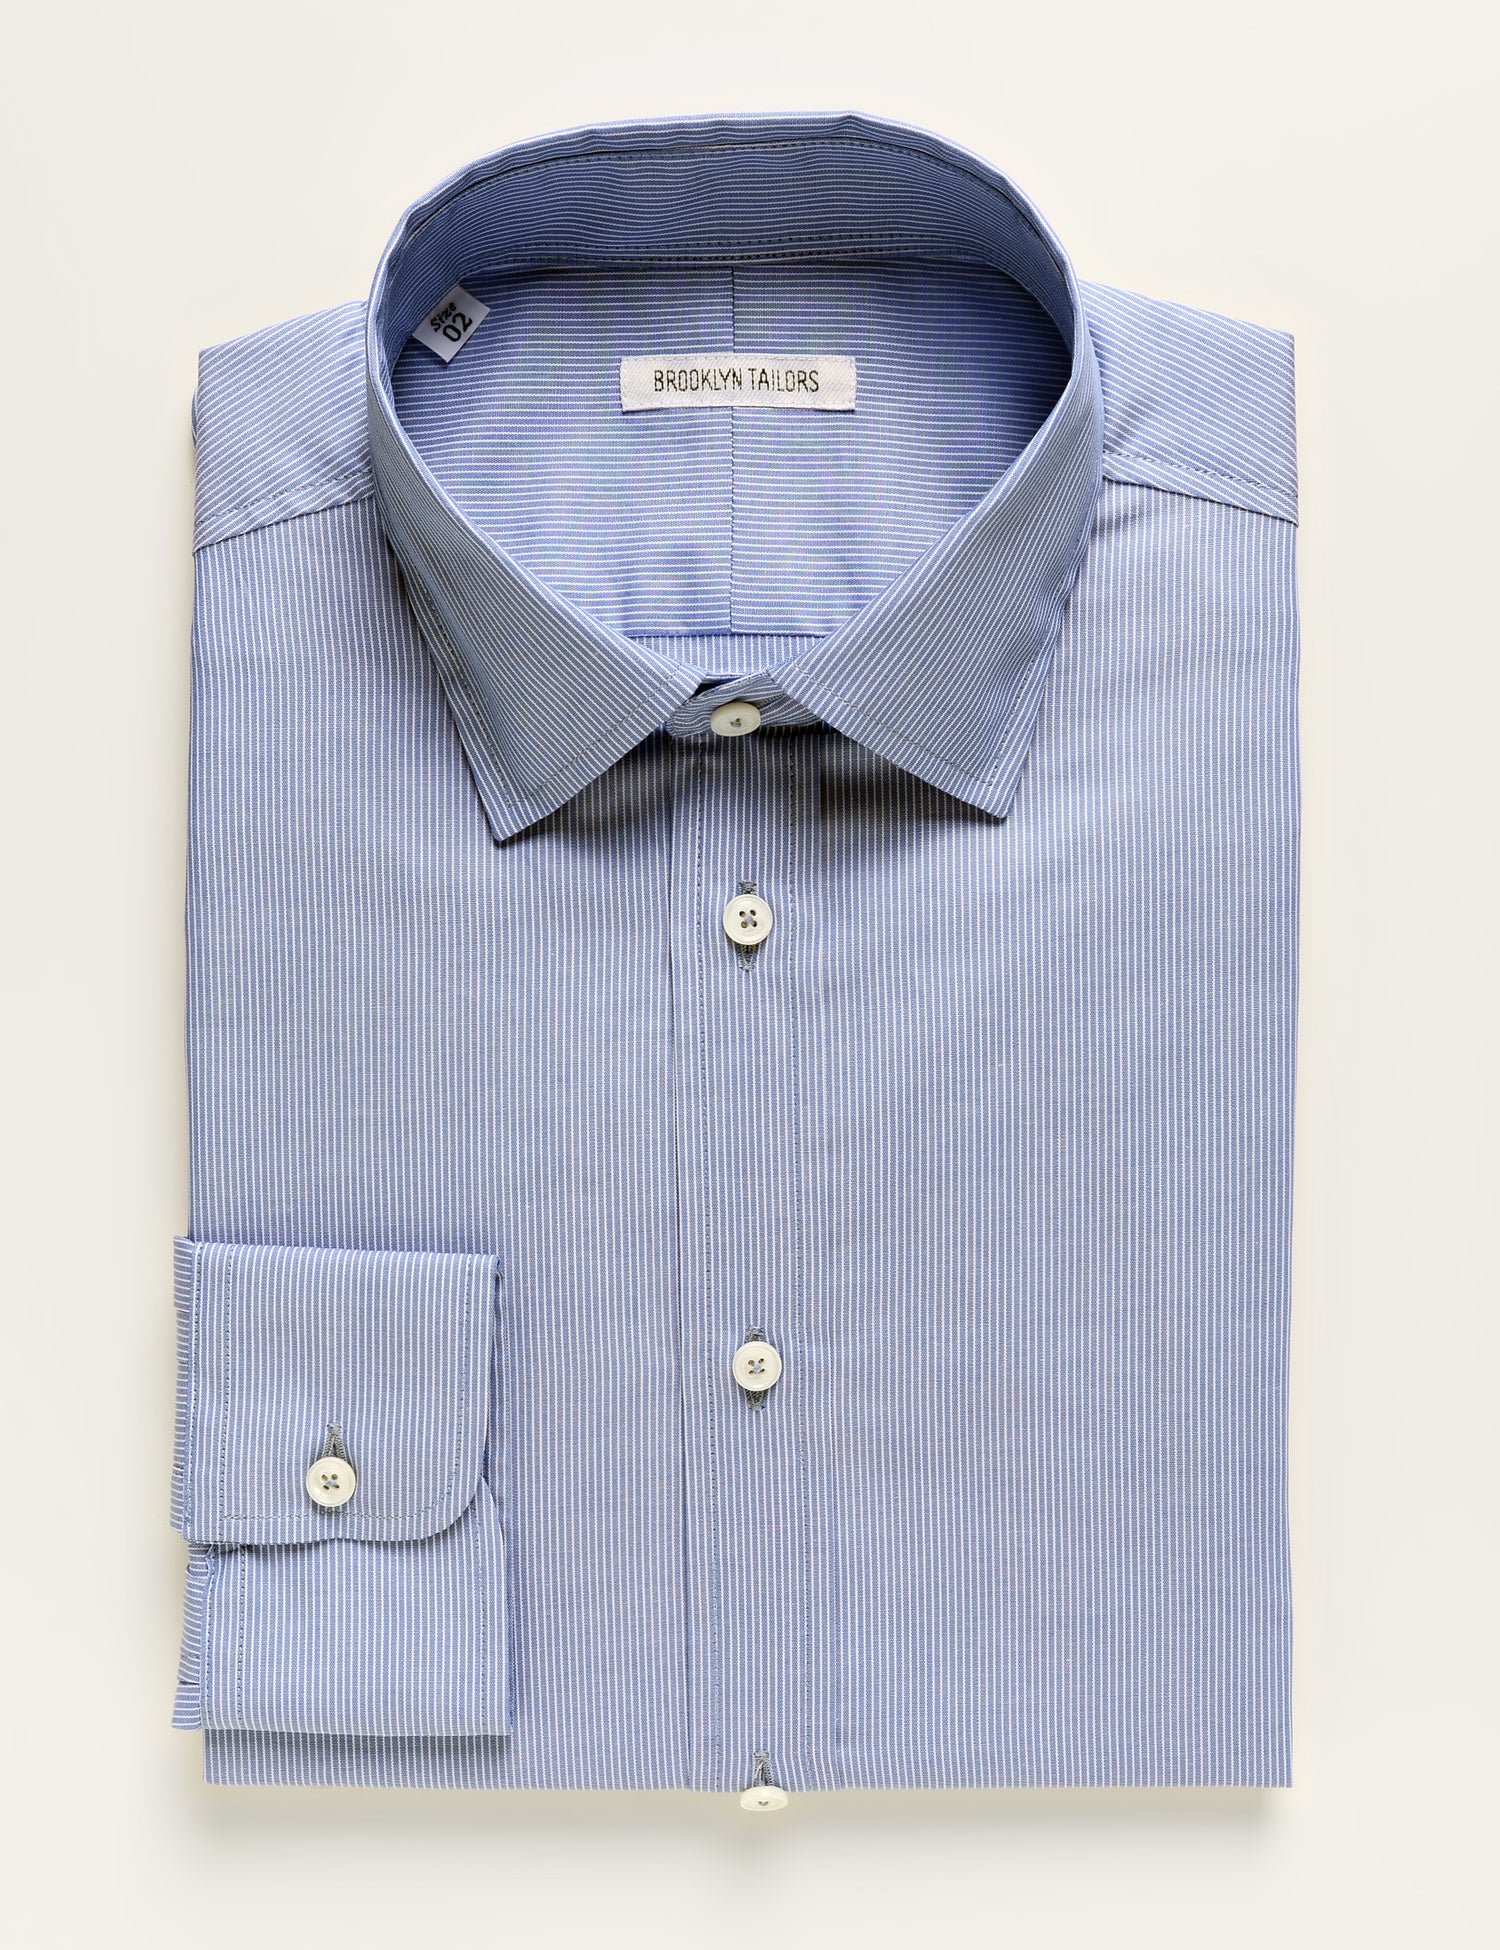 Brooklyn Tailors BKT20 Slim Dress Shirt in Professional Stripe - Imperial Blue folded flat shot